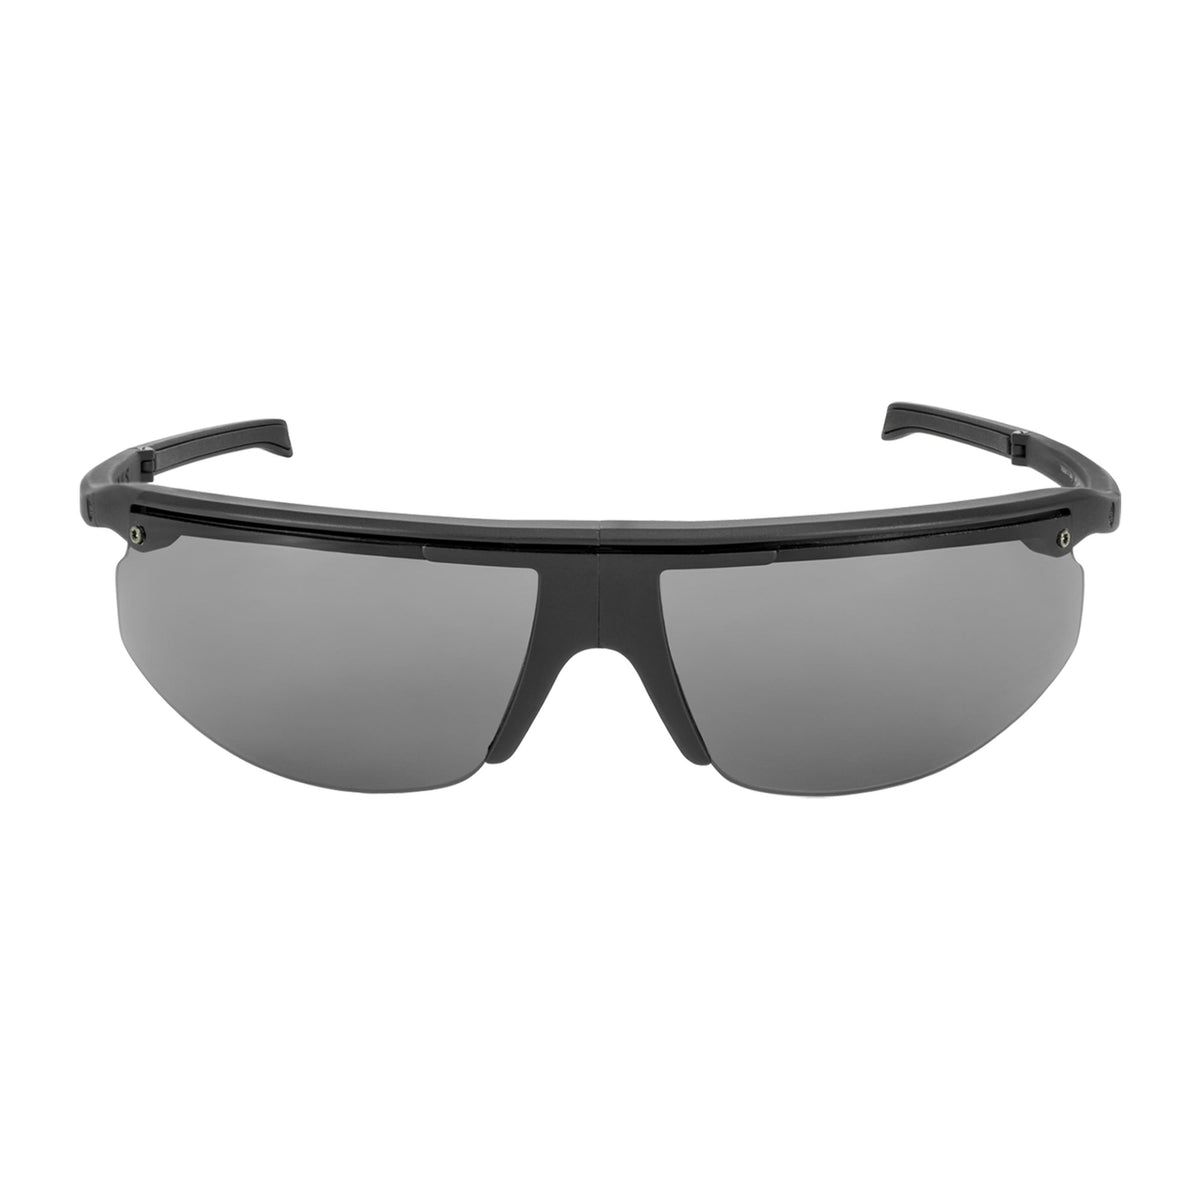 Popticals, Premium Compact Sunglasses, PopStar, 010040-BMGS, Standard Sunglasses, Matte Black Frame, Gray Lenses, Front View